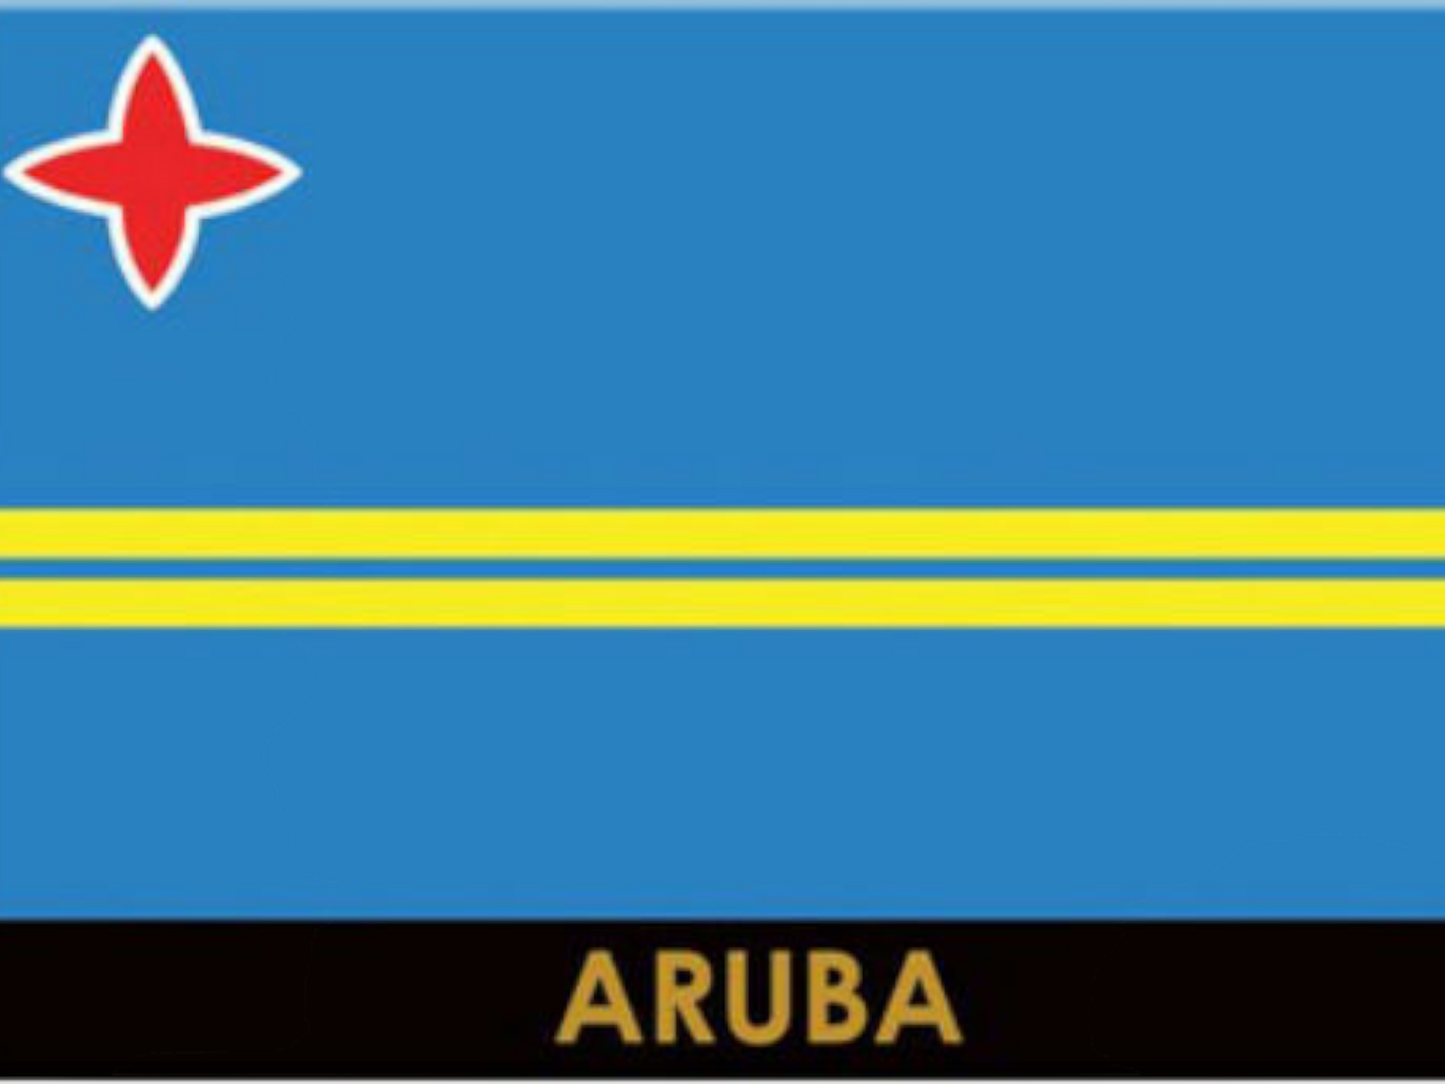 Aruba Flag Caribbean Fridge Collector's Souvenir Magnet 2.5 inches X 3.5 inches